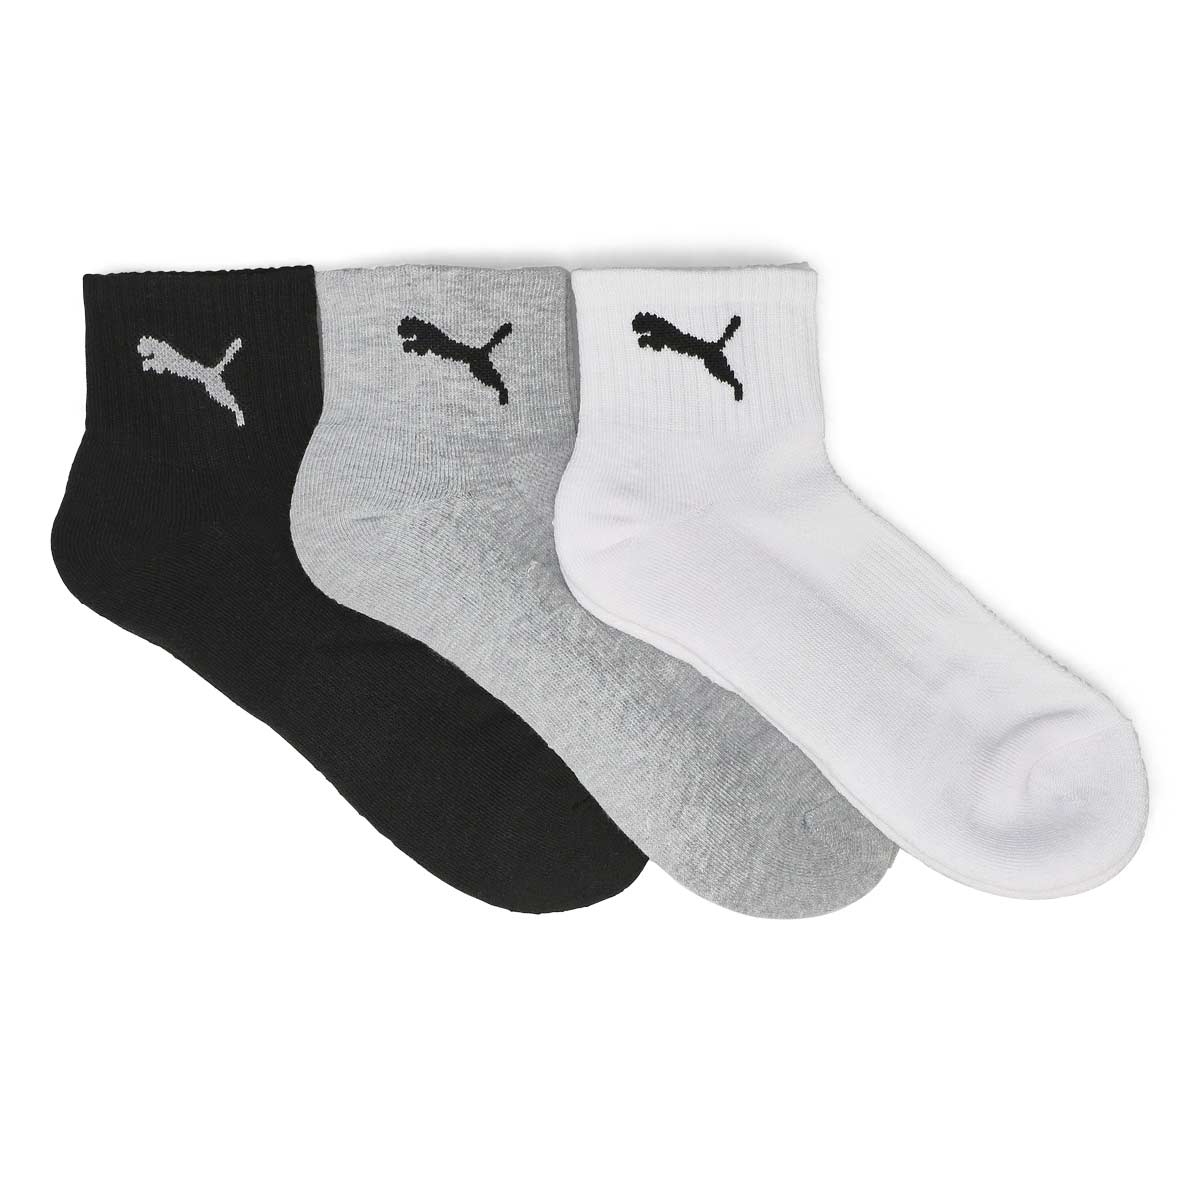 Puma Unisex Adult Cushioned Trainer Socks (Pack of 3) (3.5, 6) (White/Black)